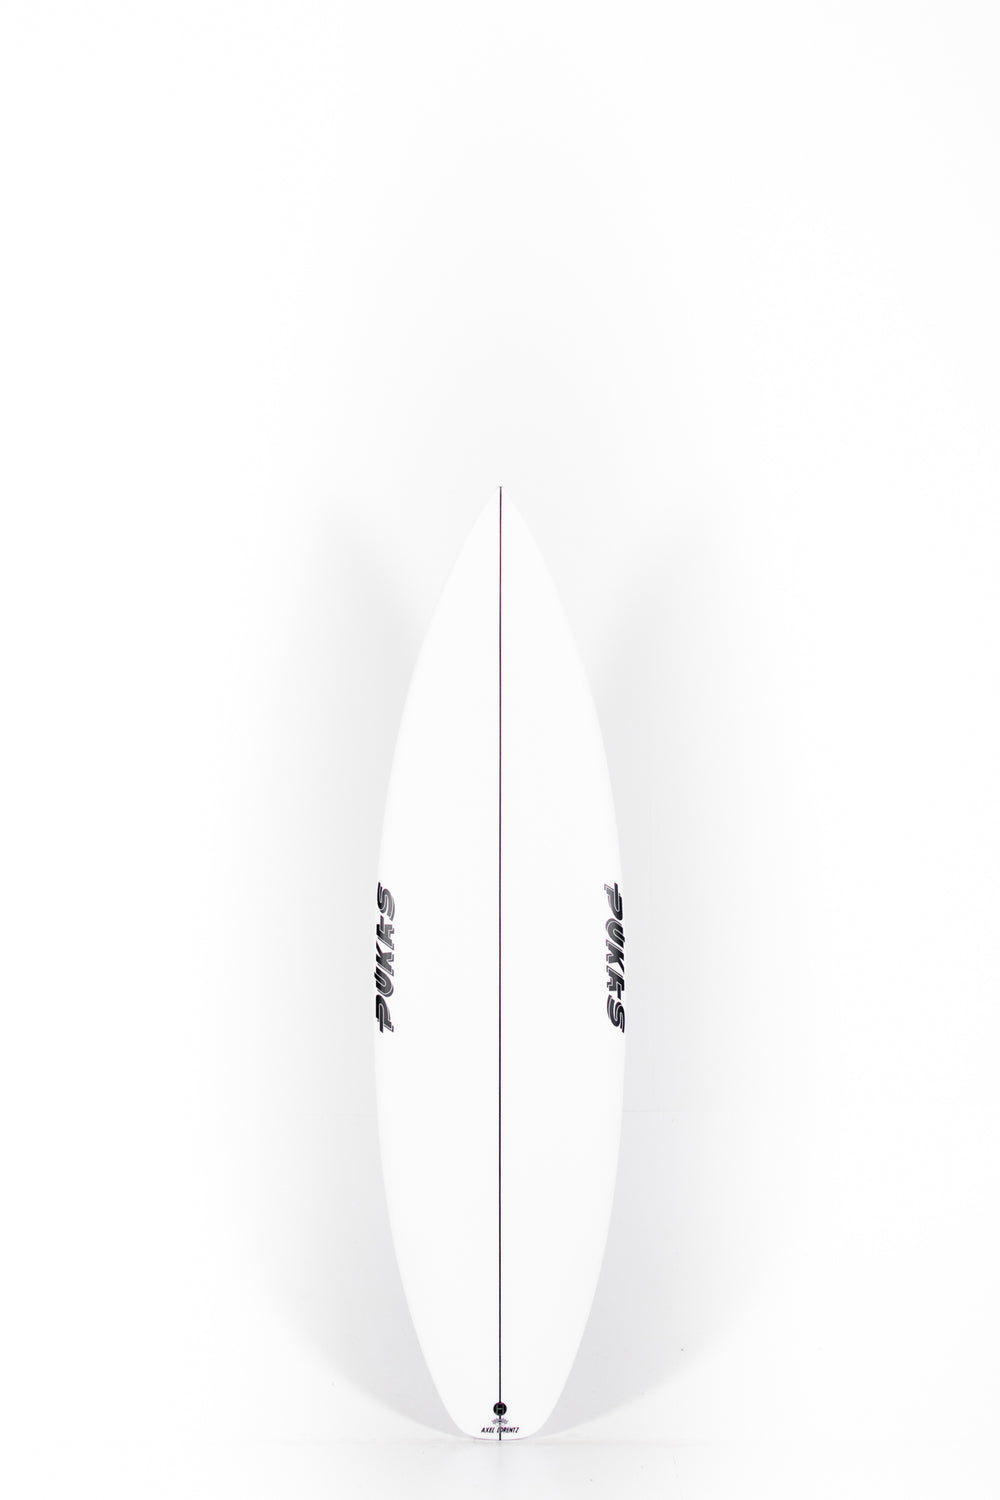 Pukas Surf shop - Pukas Surfboard - DARK by Axel Lorentz - 6’1” x 19,63 x 2,4 - 30,67L - AX05948